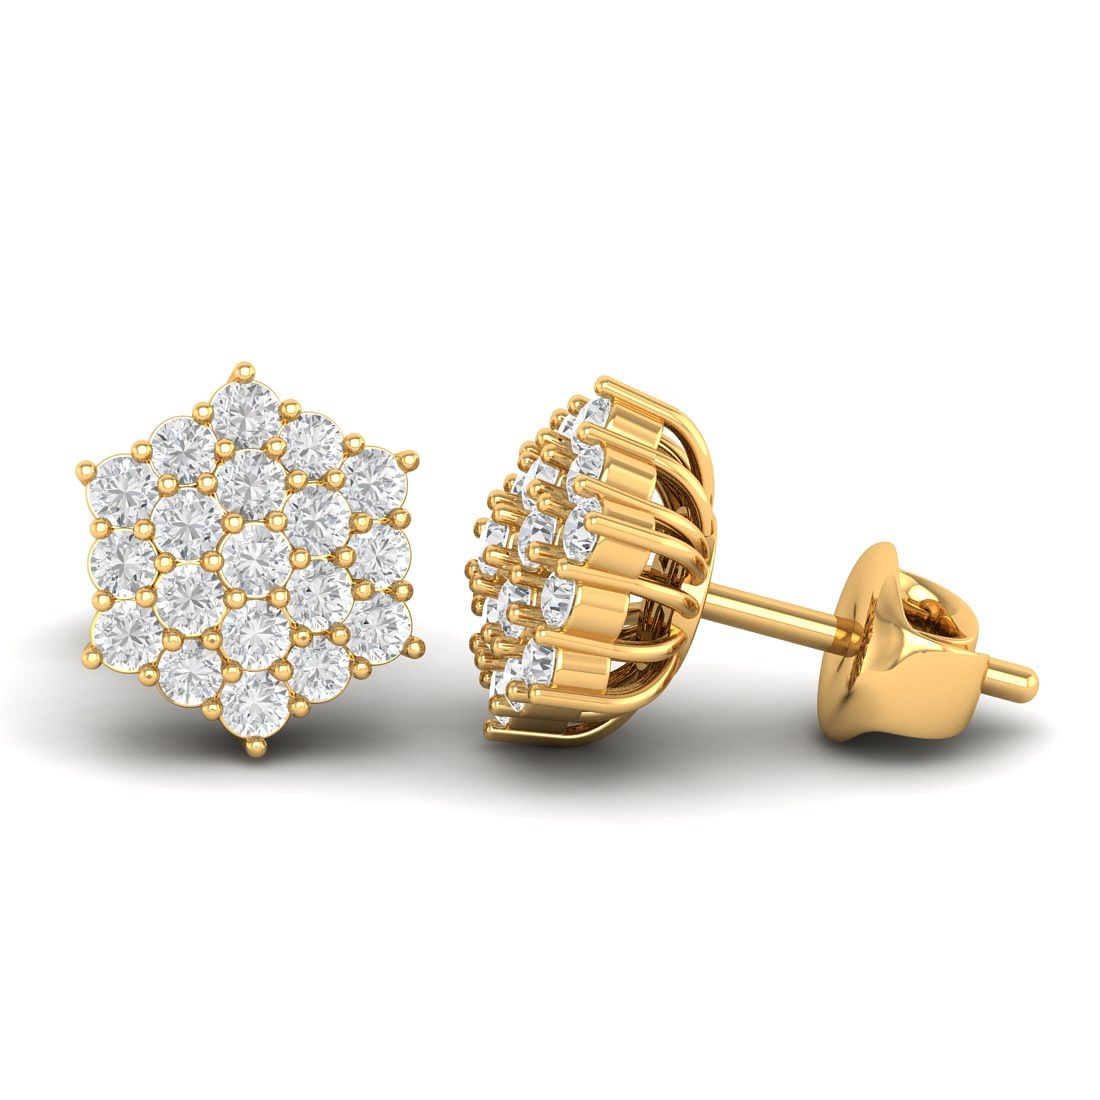 14k Yellow Gold Galaxy Diamond Earrings For Her